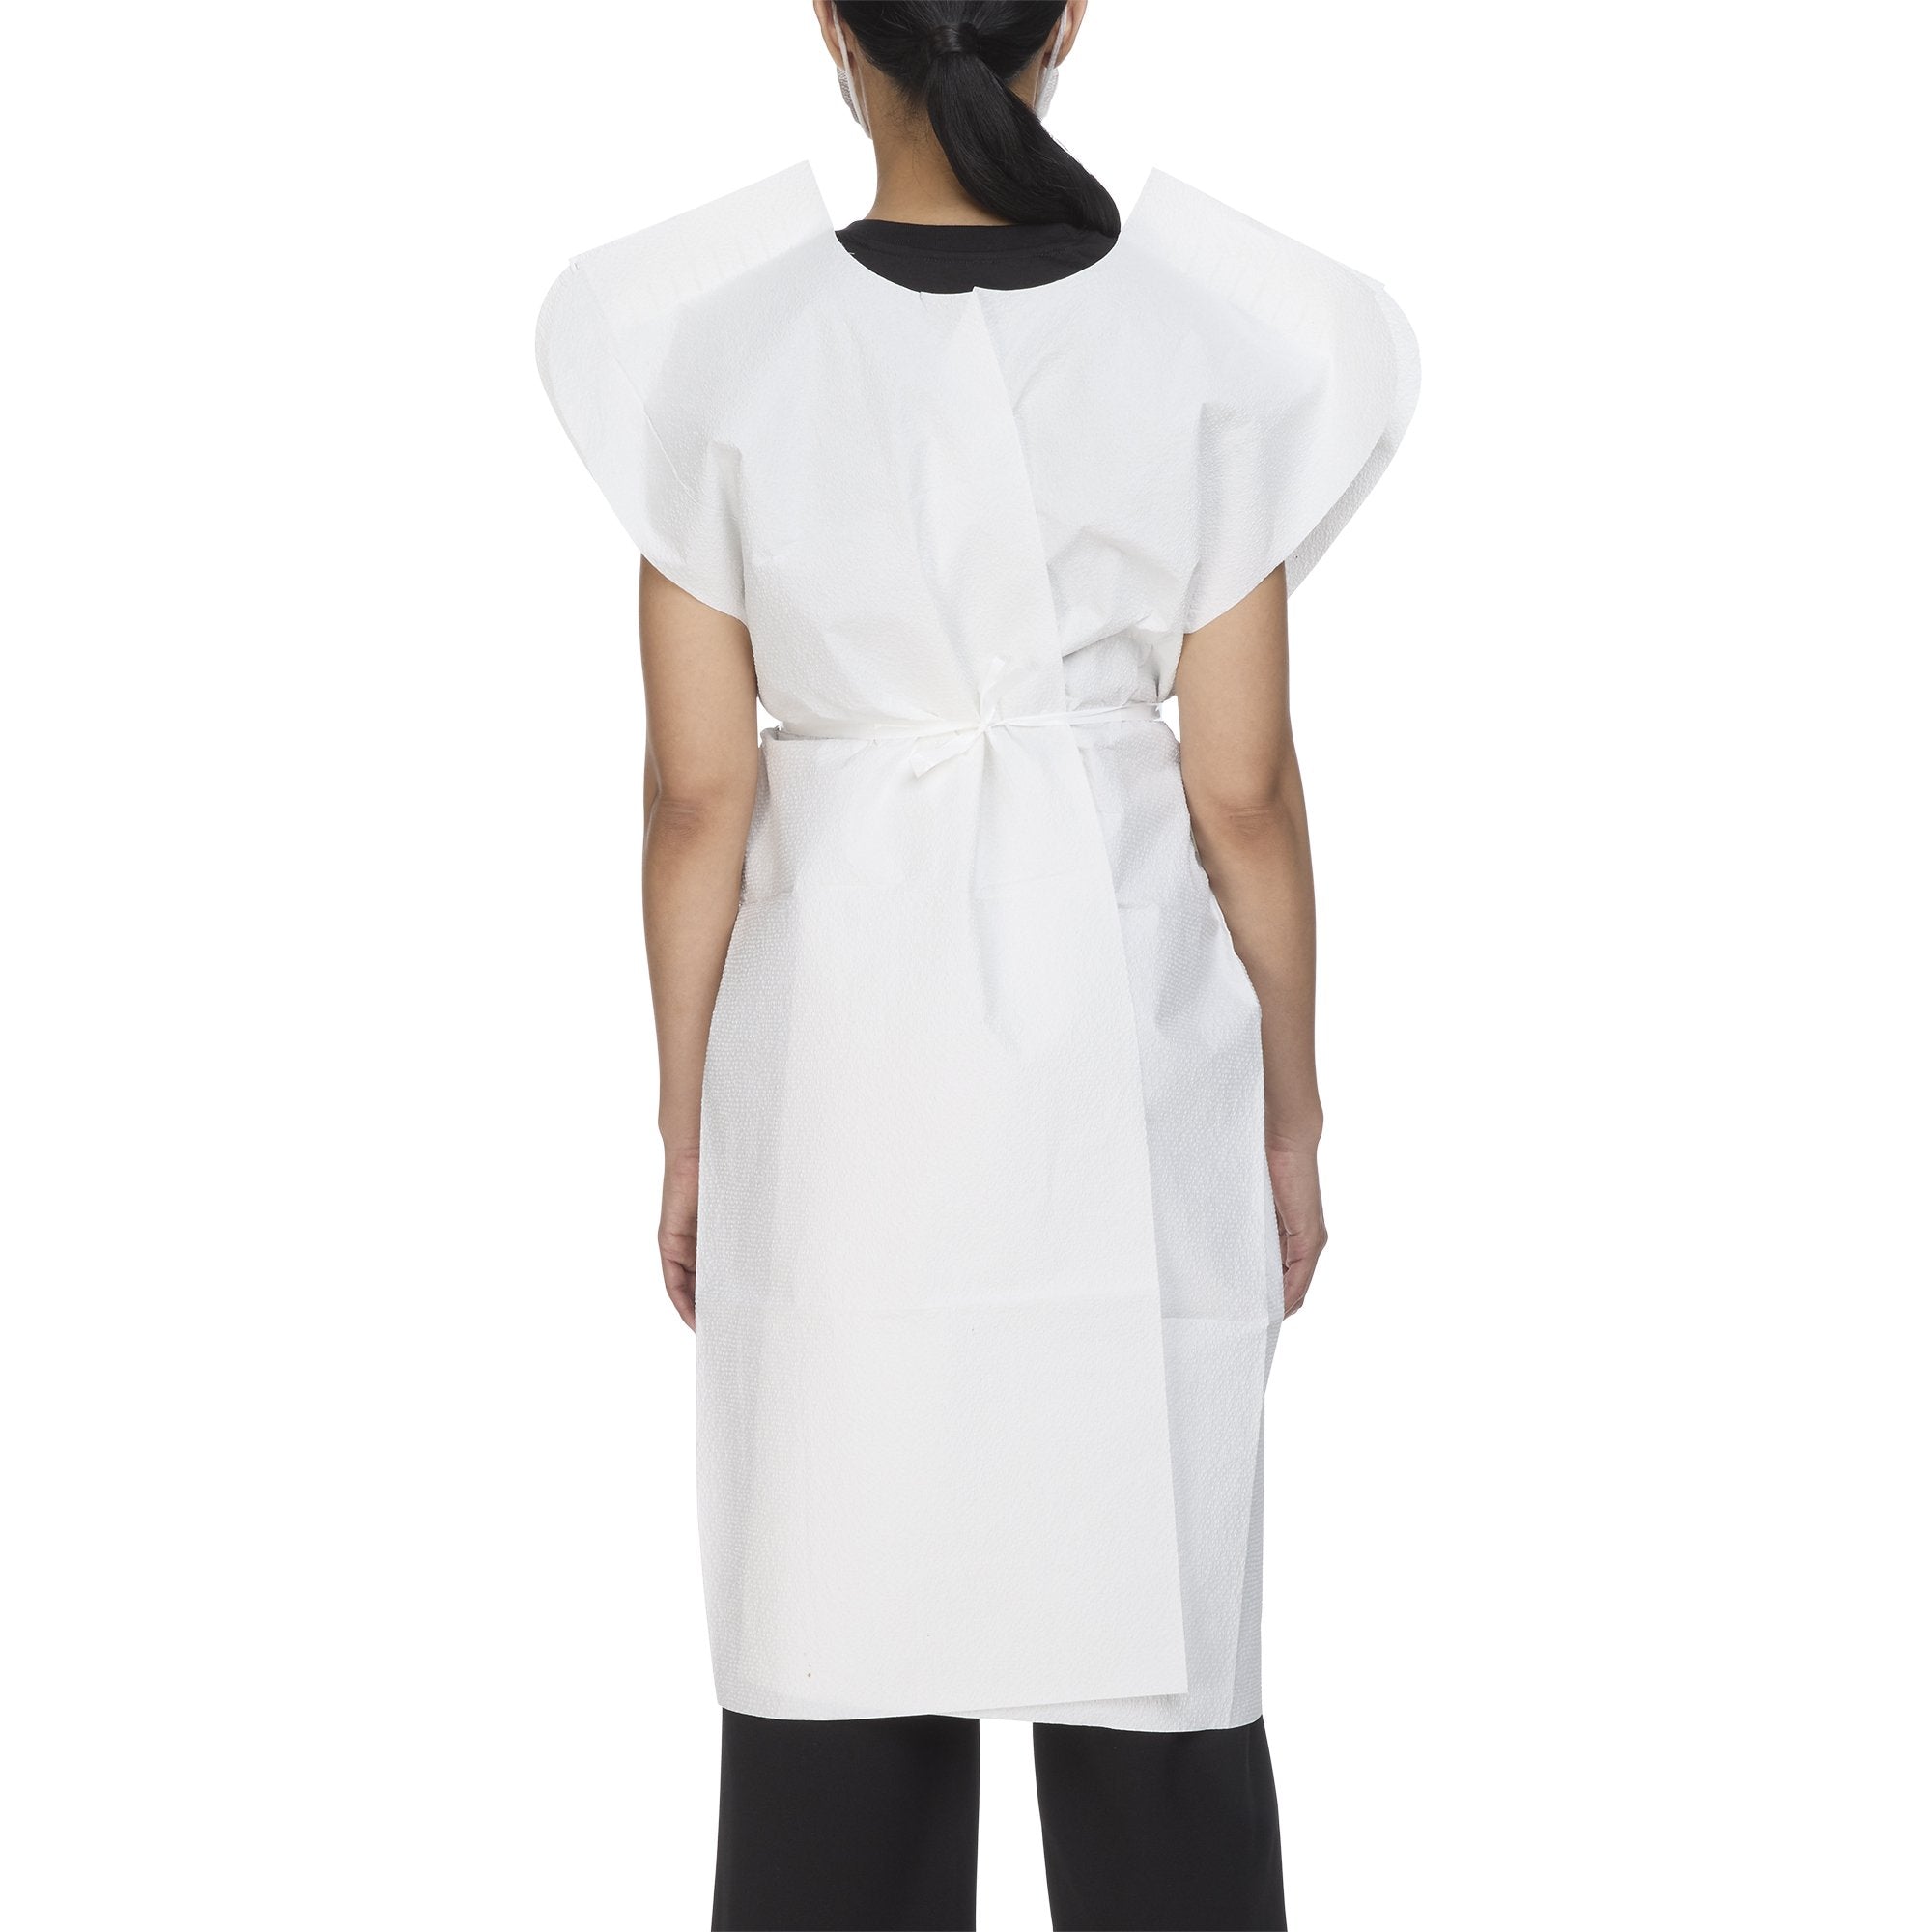 McKesson Patient Exam Gown (50 Units)